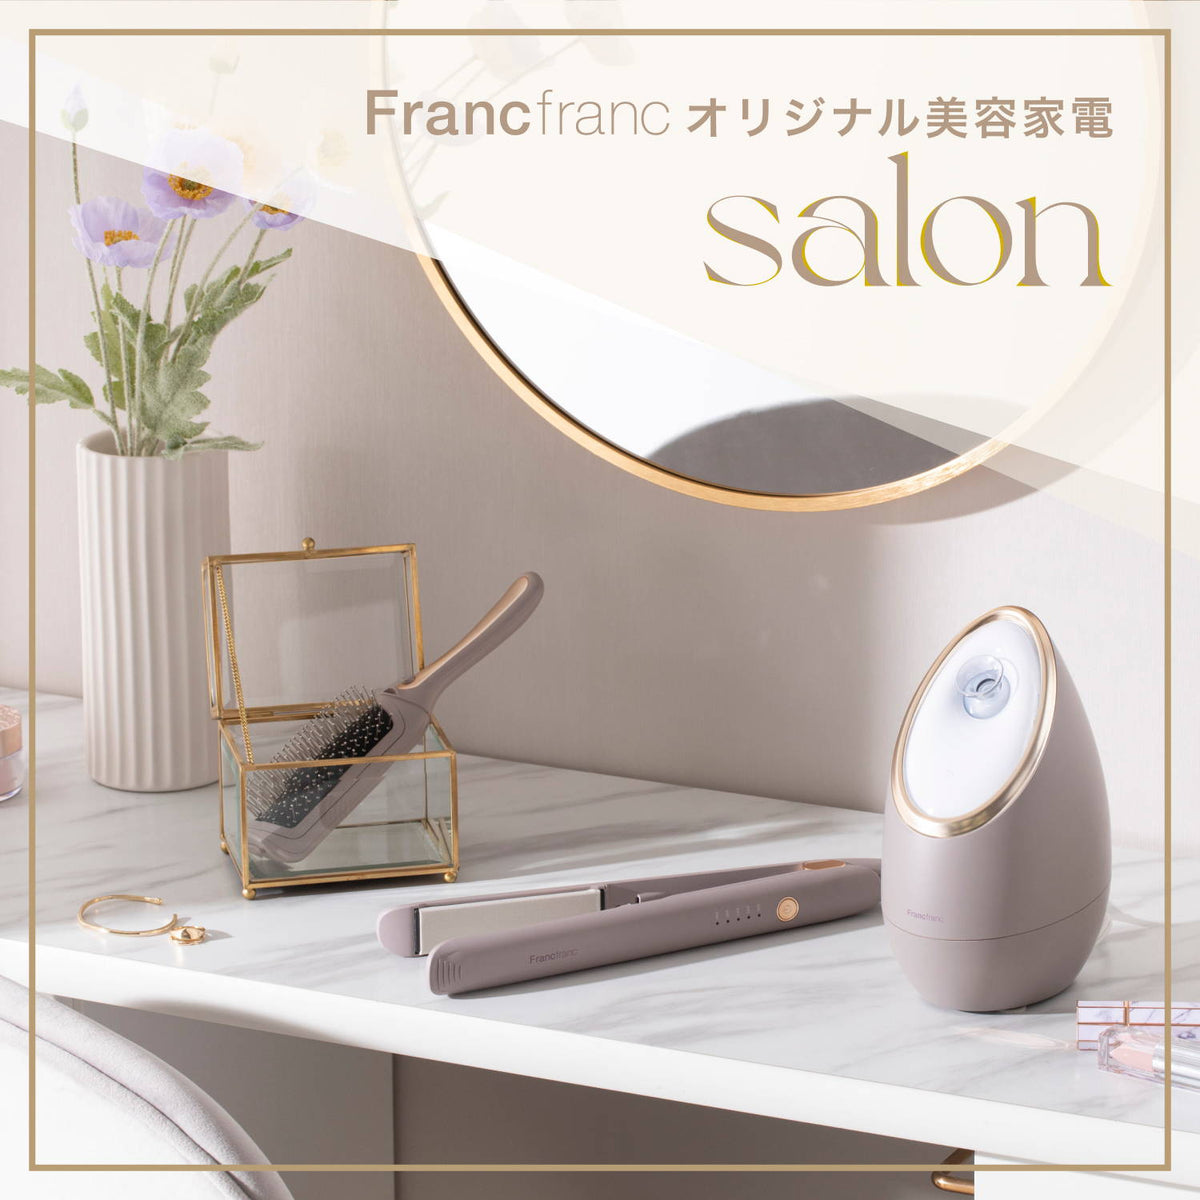 Francfranc オリジナル美容家電「salon」シリーズ特集 | Francfranc 